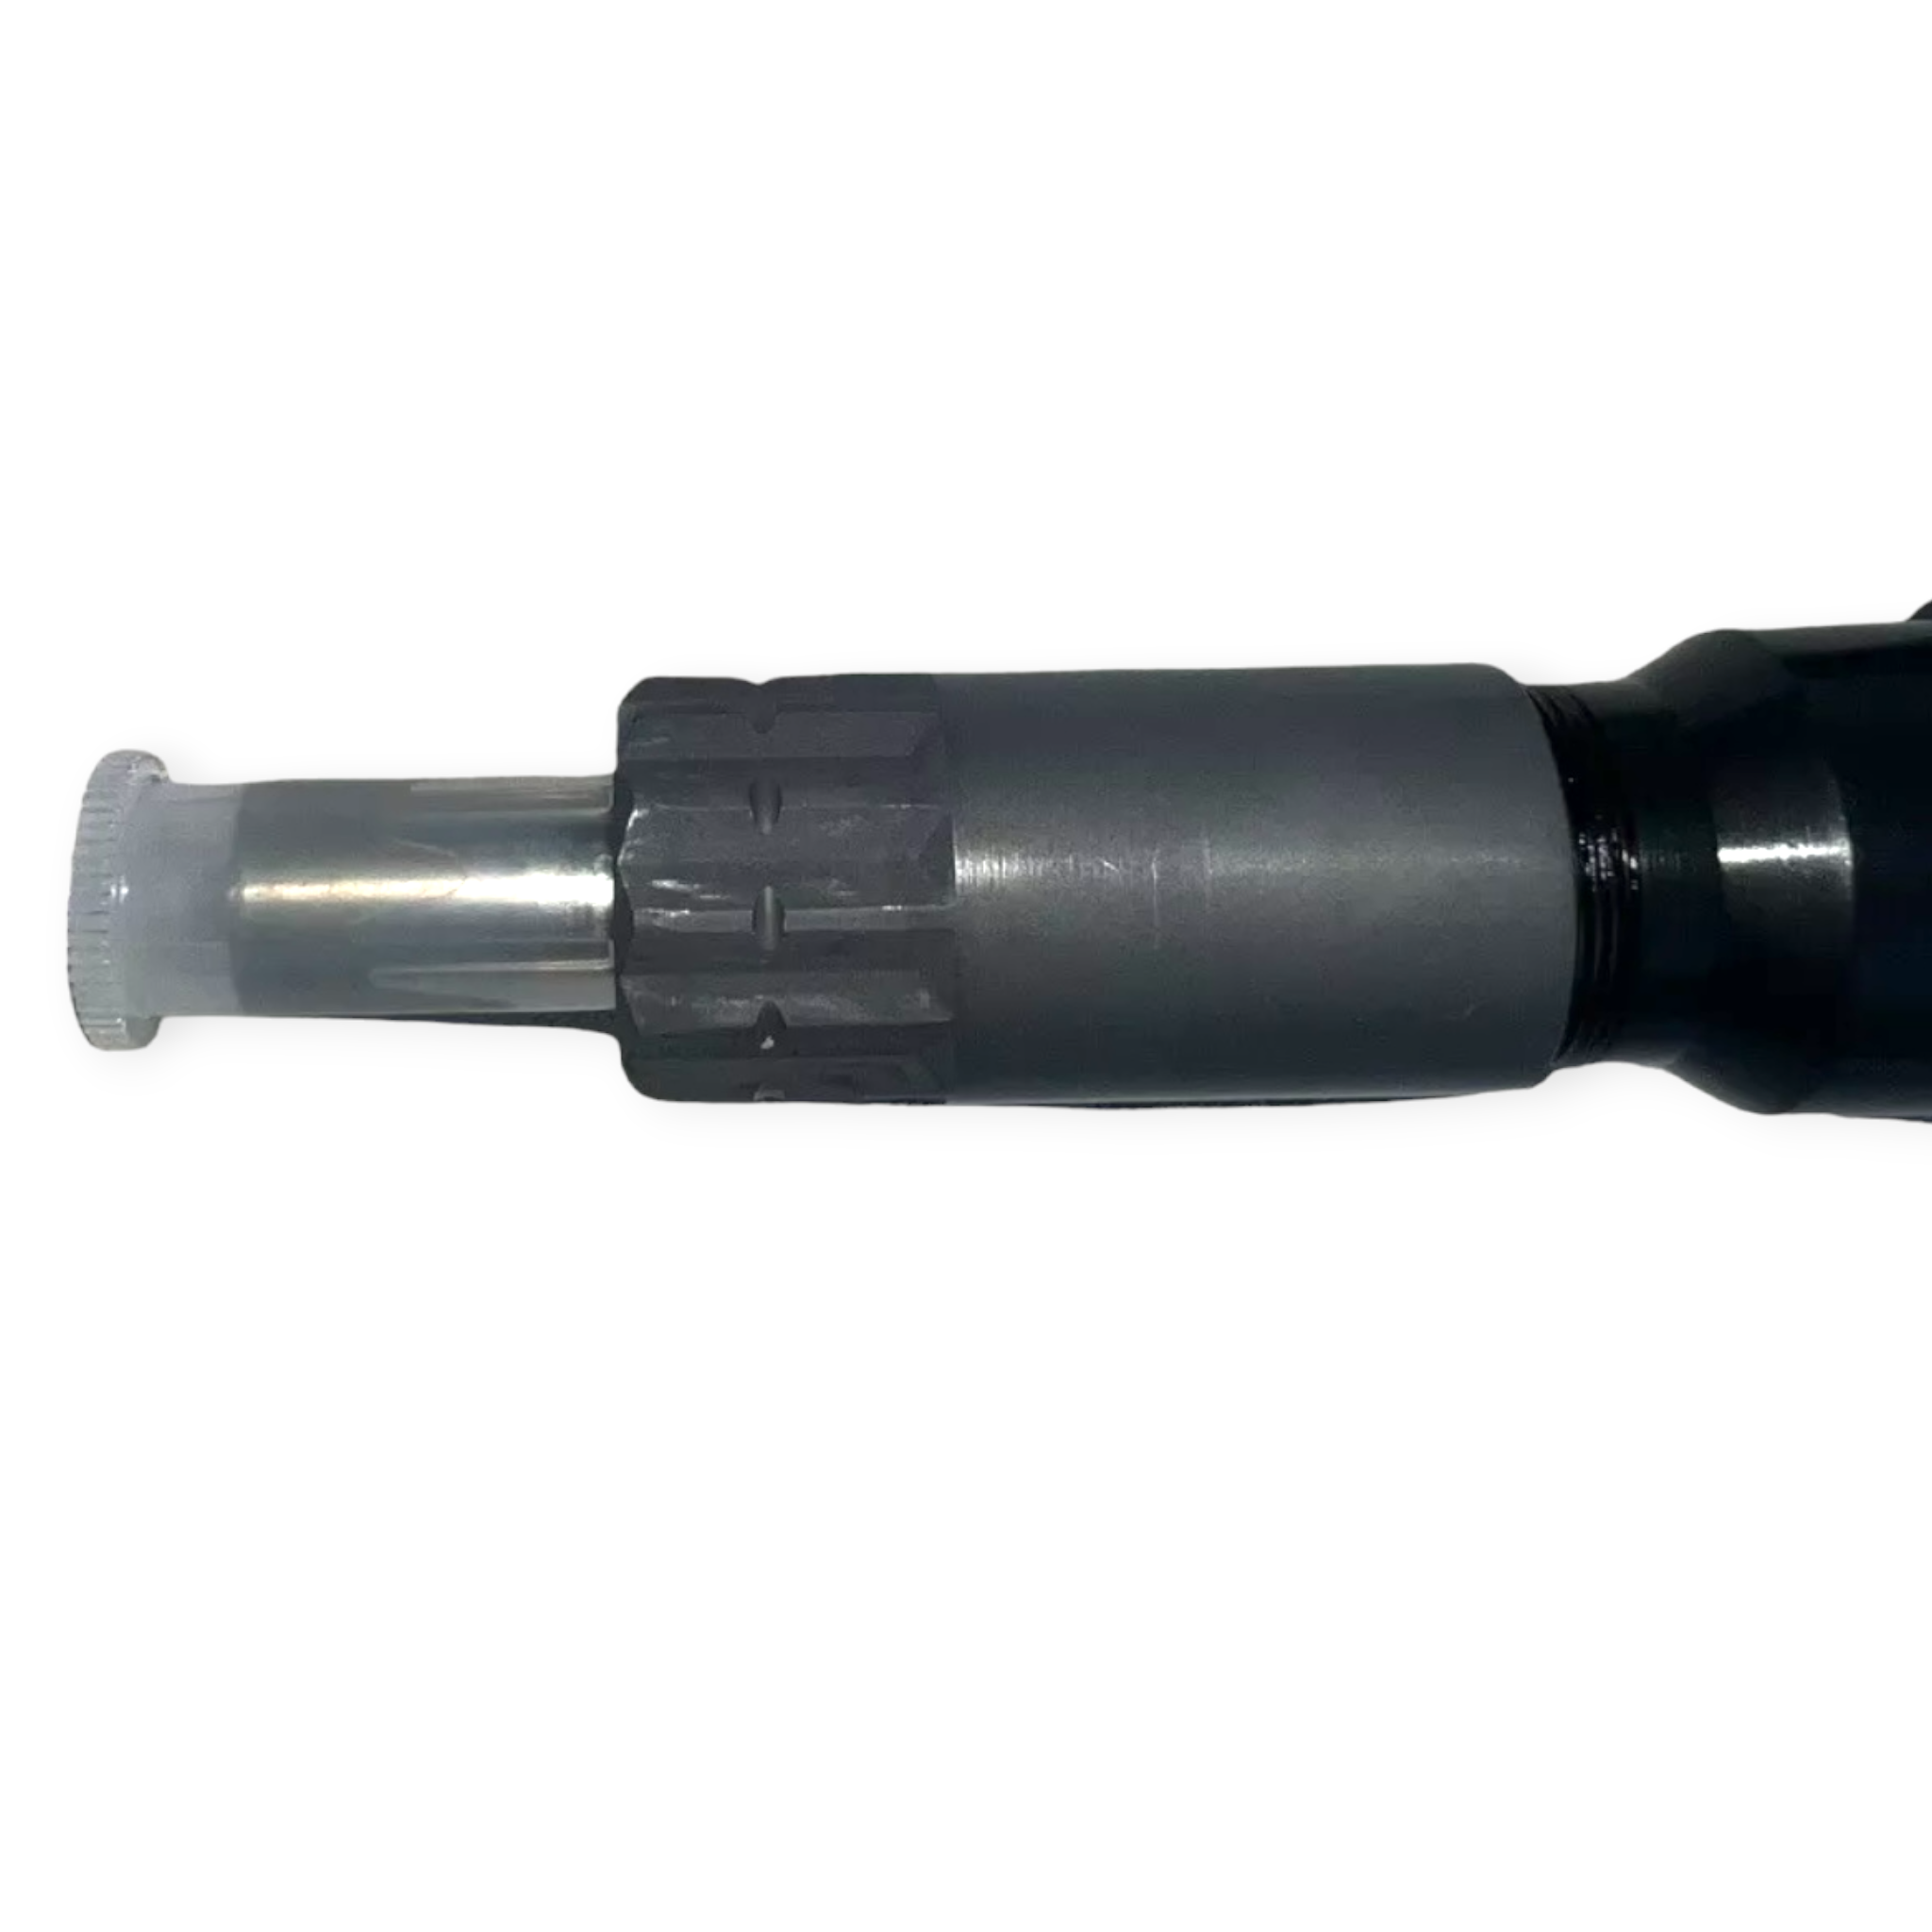 8973297035 | Injector for Isuzu Denso 4HK1 6HK1 Engine | 095000-5471 |  8-98284393-0